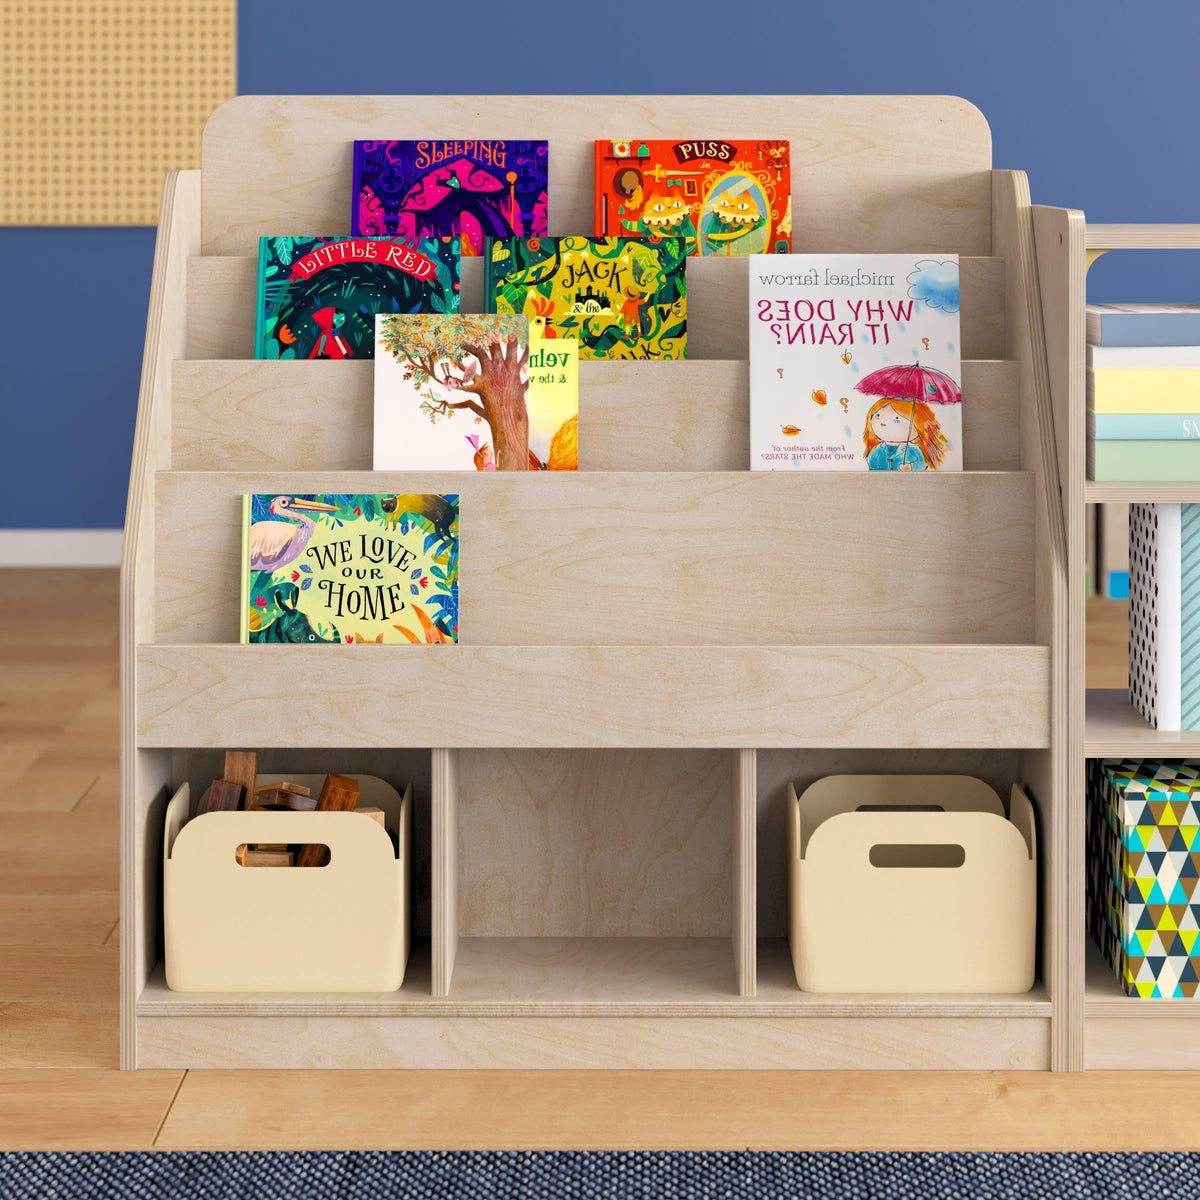 Commercial Grade Natural Wooden 4 Tier Classroom Bookstand Display Shelf